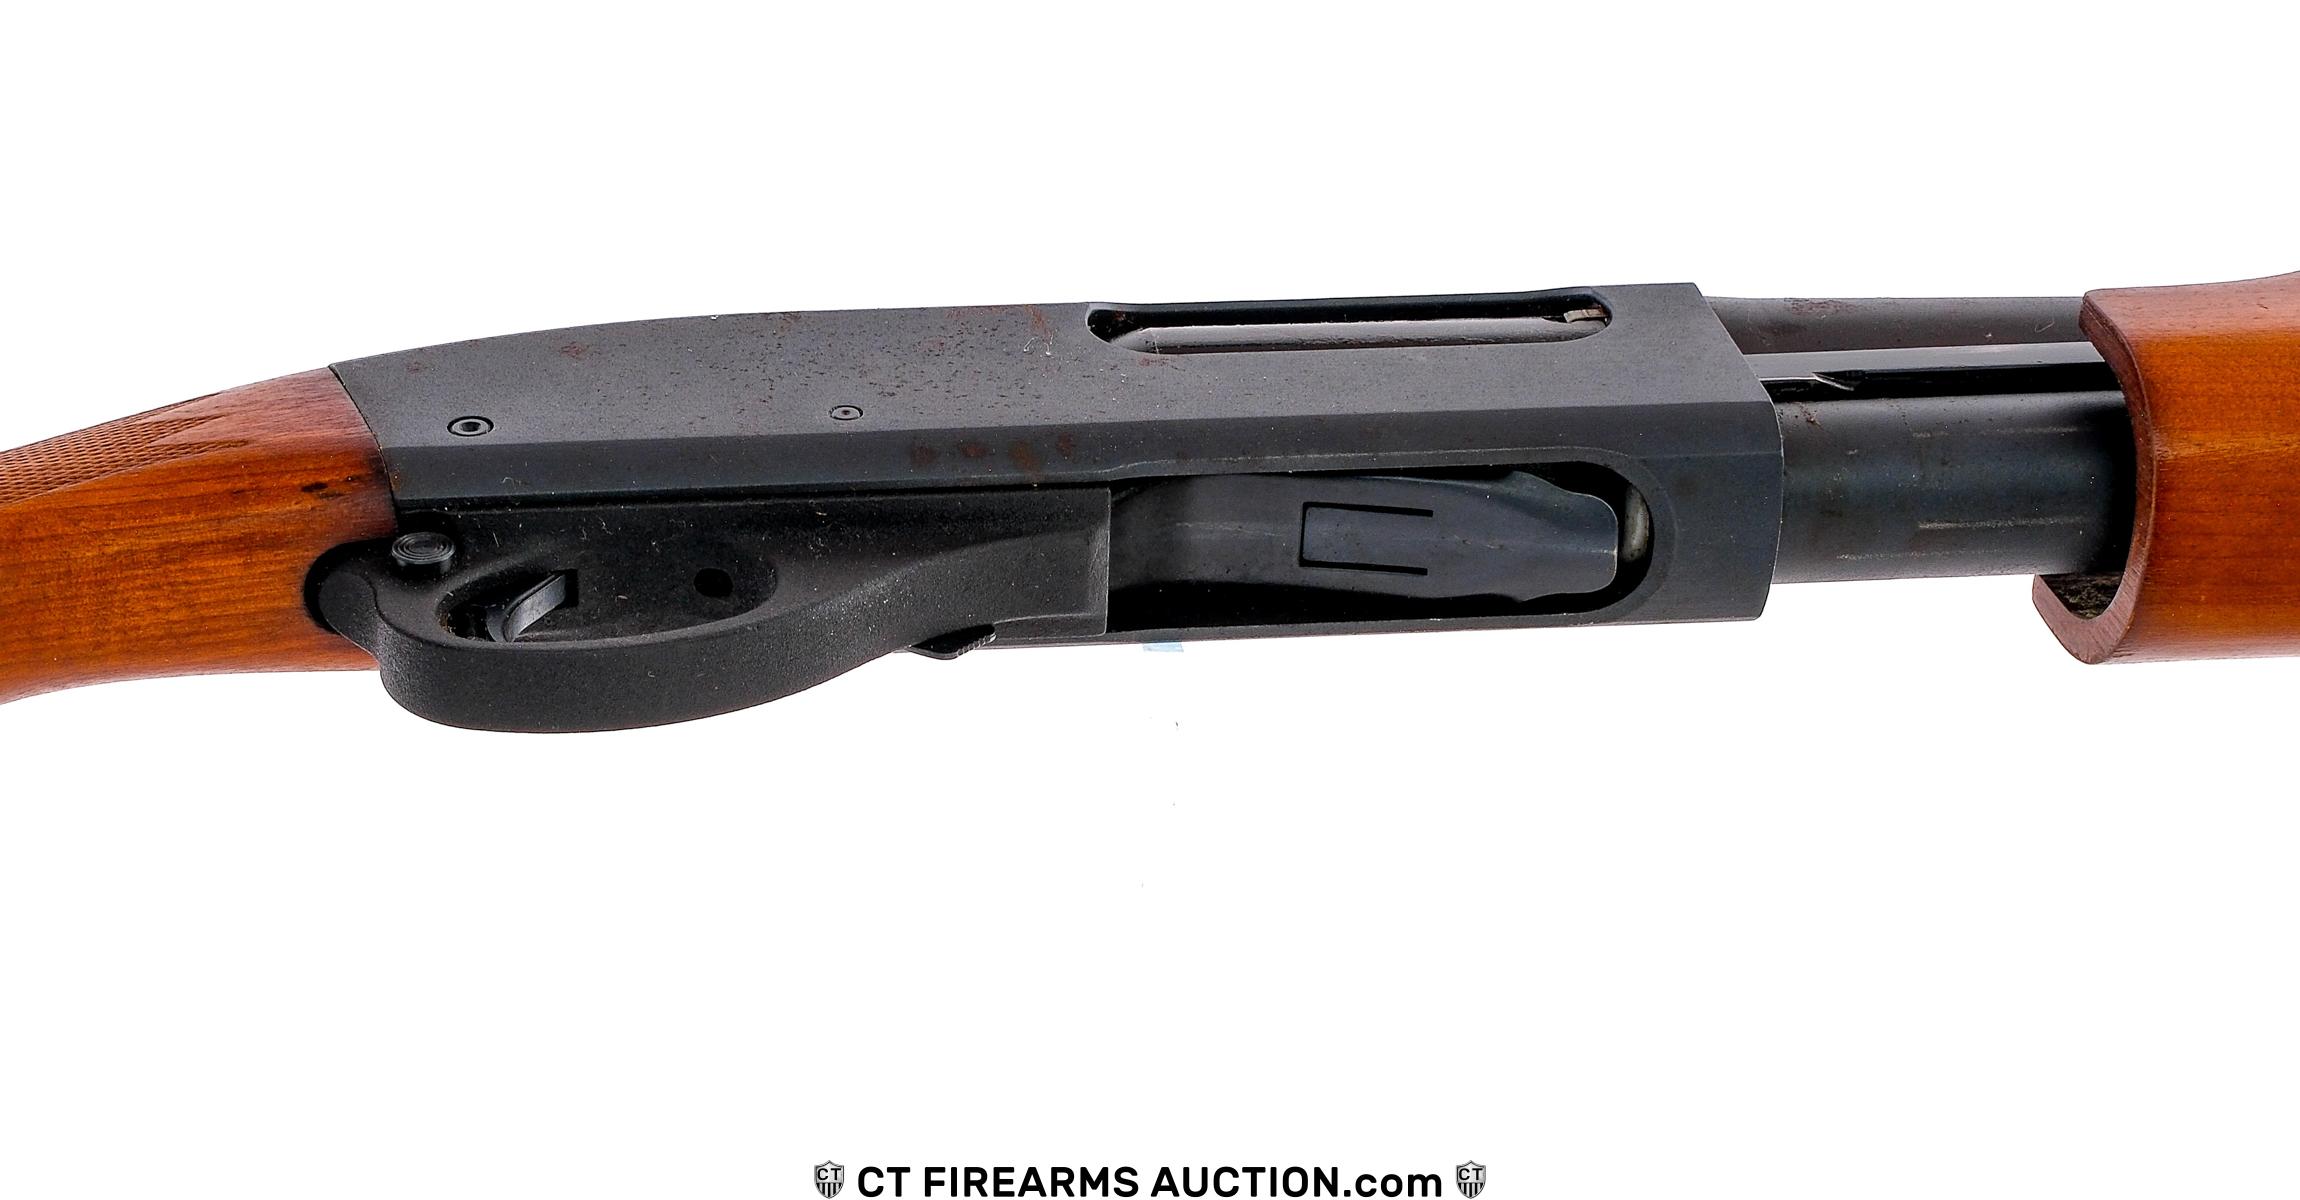 Remington 870 Express Magnum 12Ga Pump Shotgun